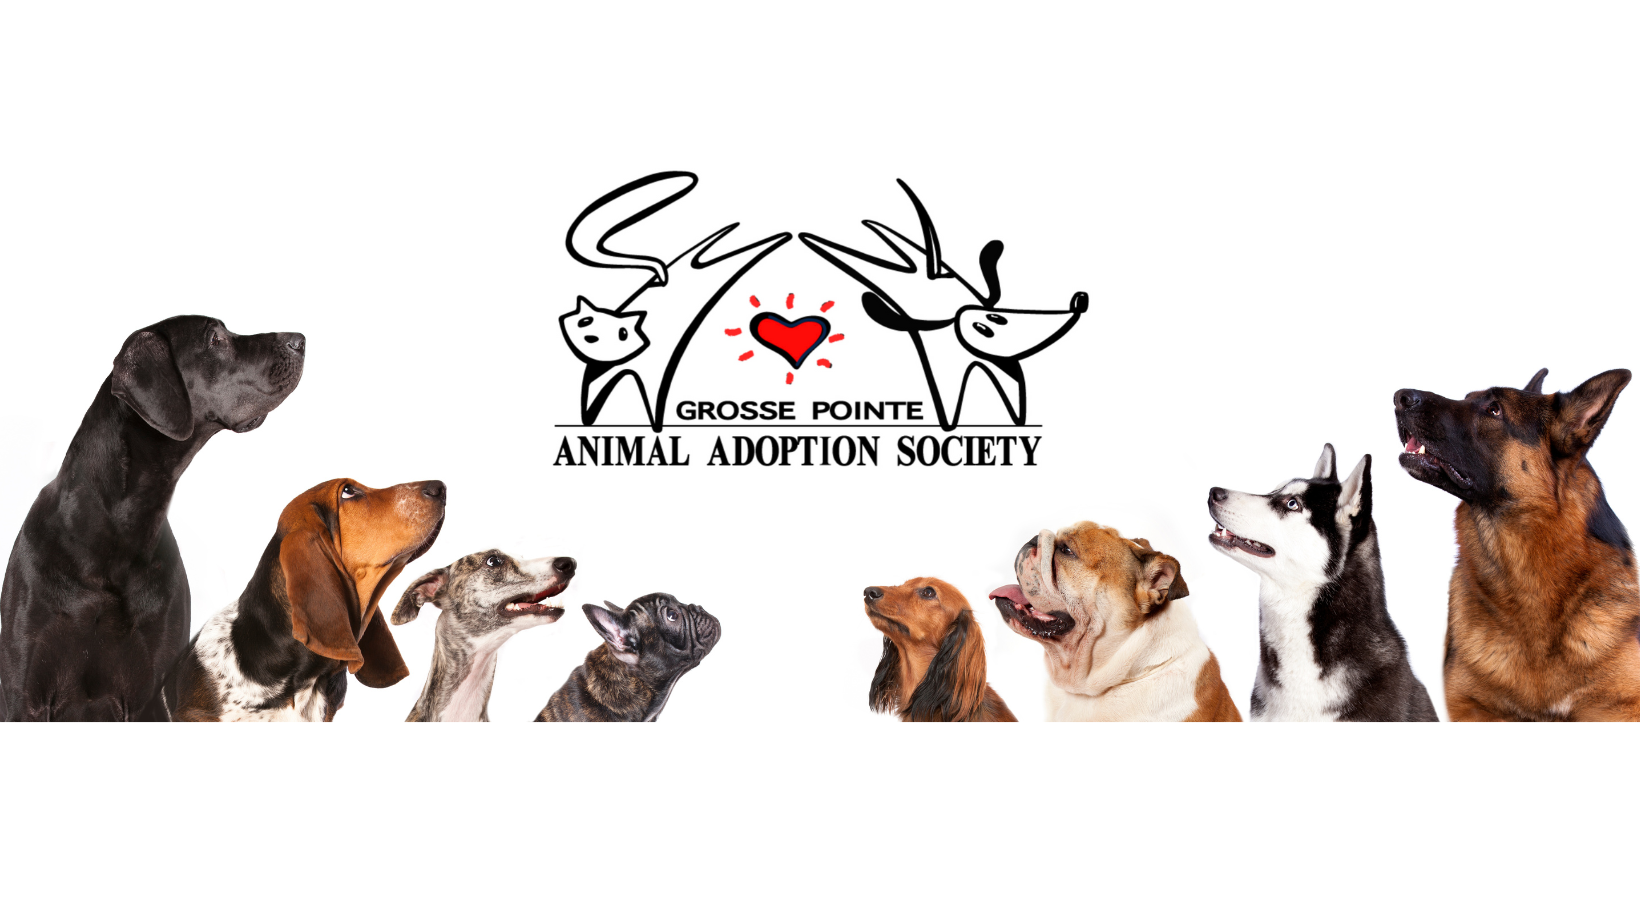 Grosse Pointe Animal Adoption Society